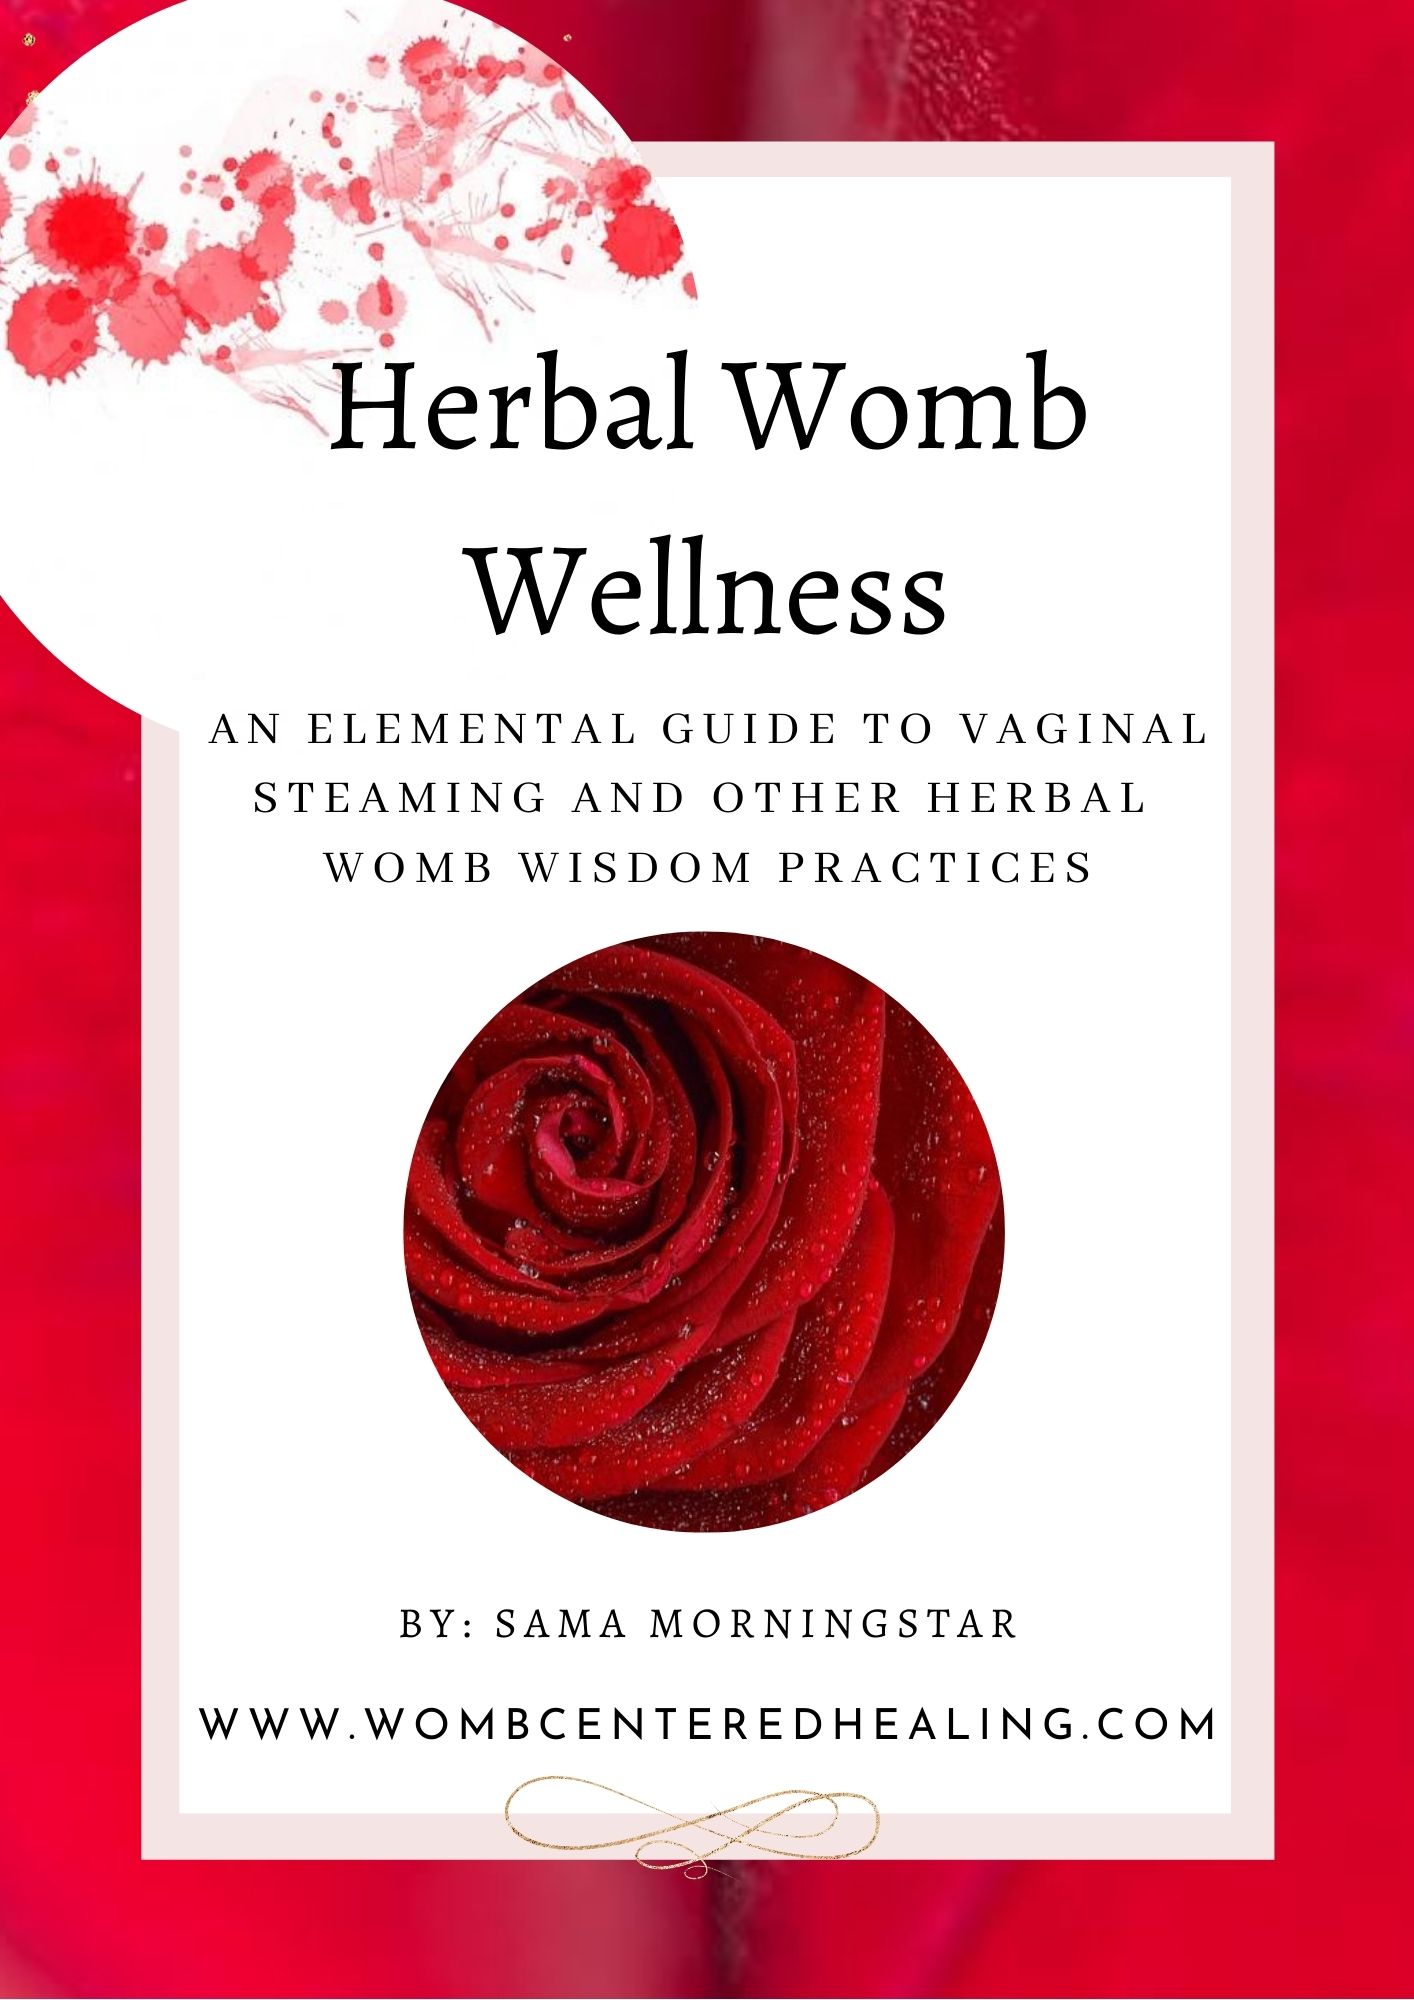 Herbal Womb Wellness Speaker Series (Every Friday)